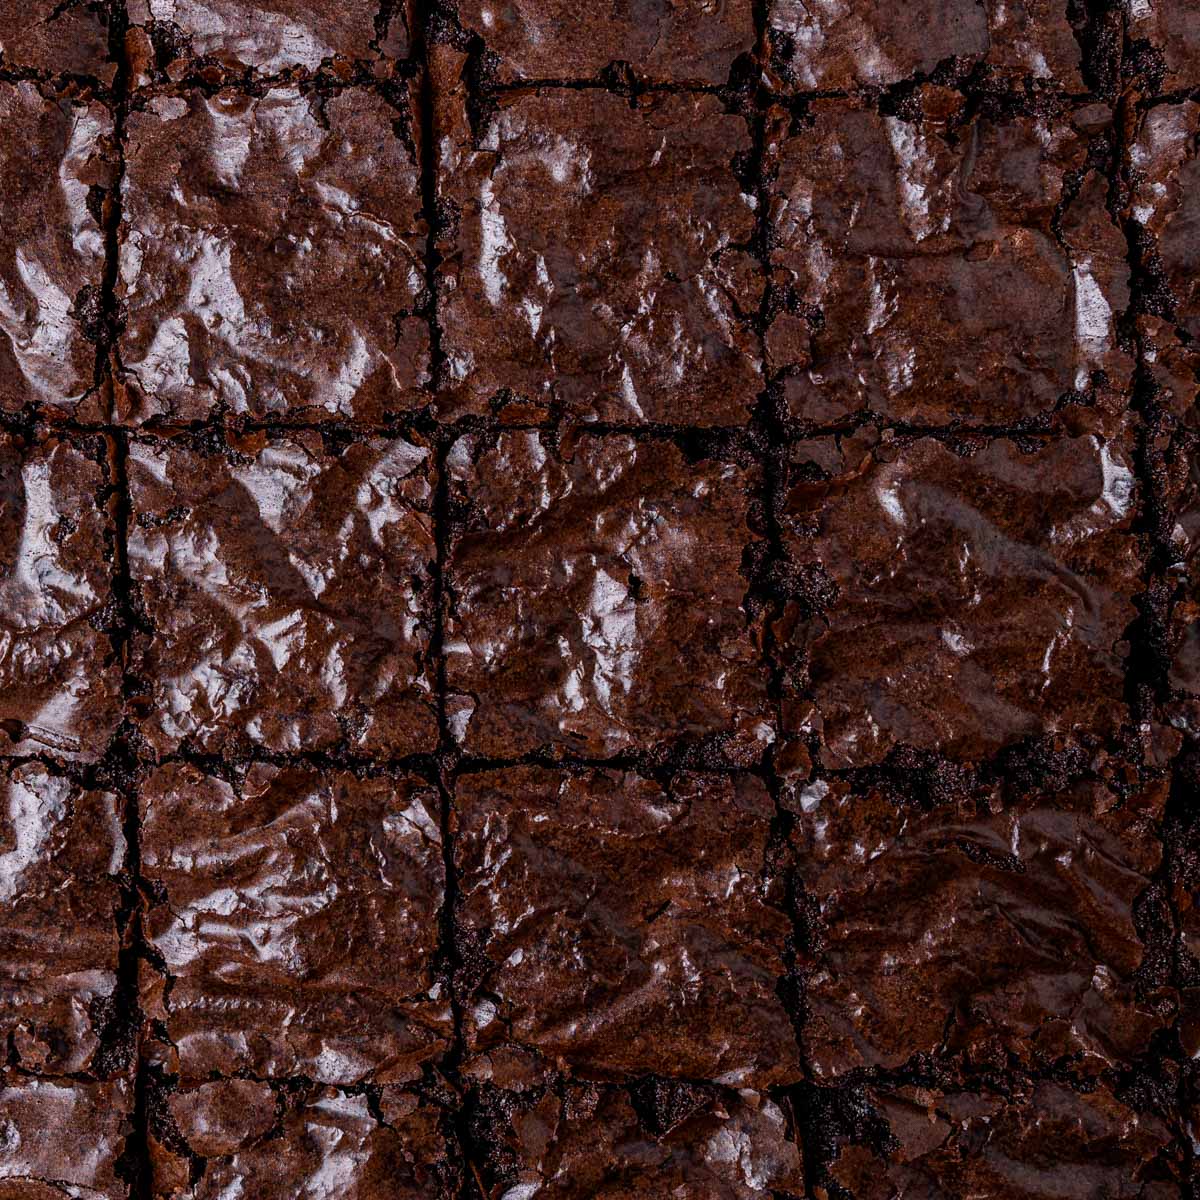 https://www.tastesoflizzyt.com/wp-content/uploads/2022/10/how-to-make-box-brownies-better_-5.jpg